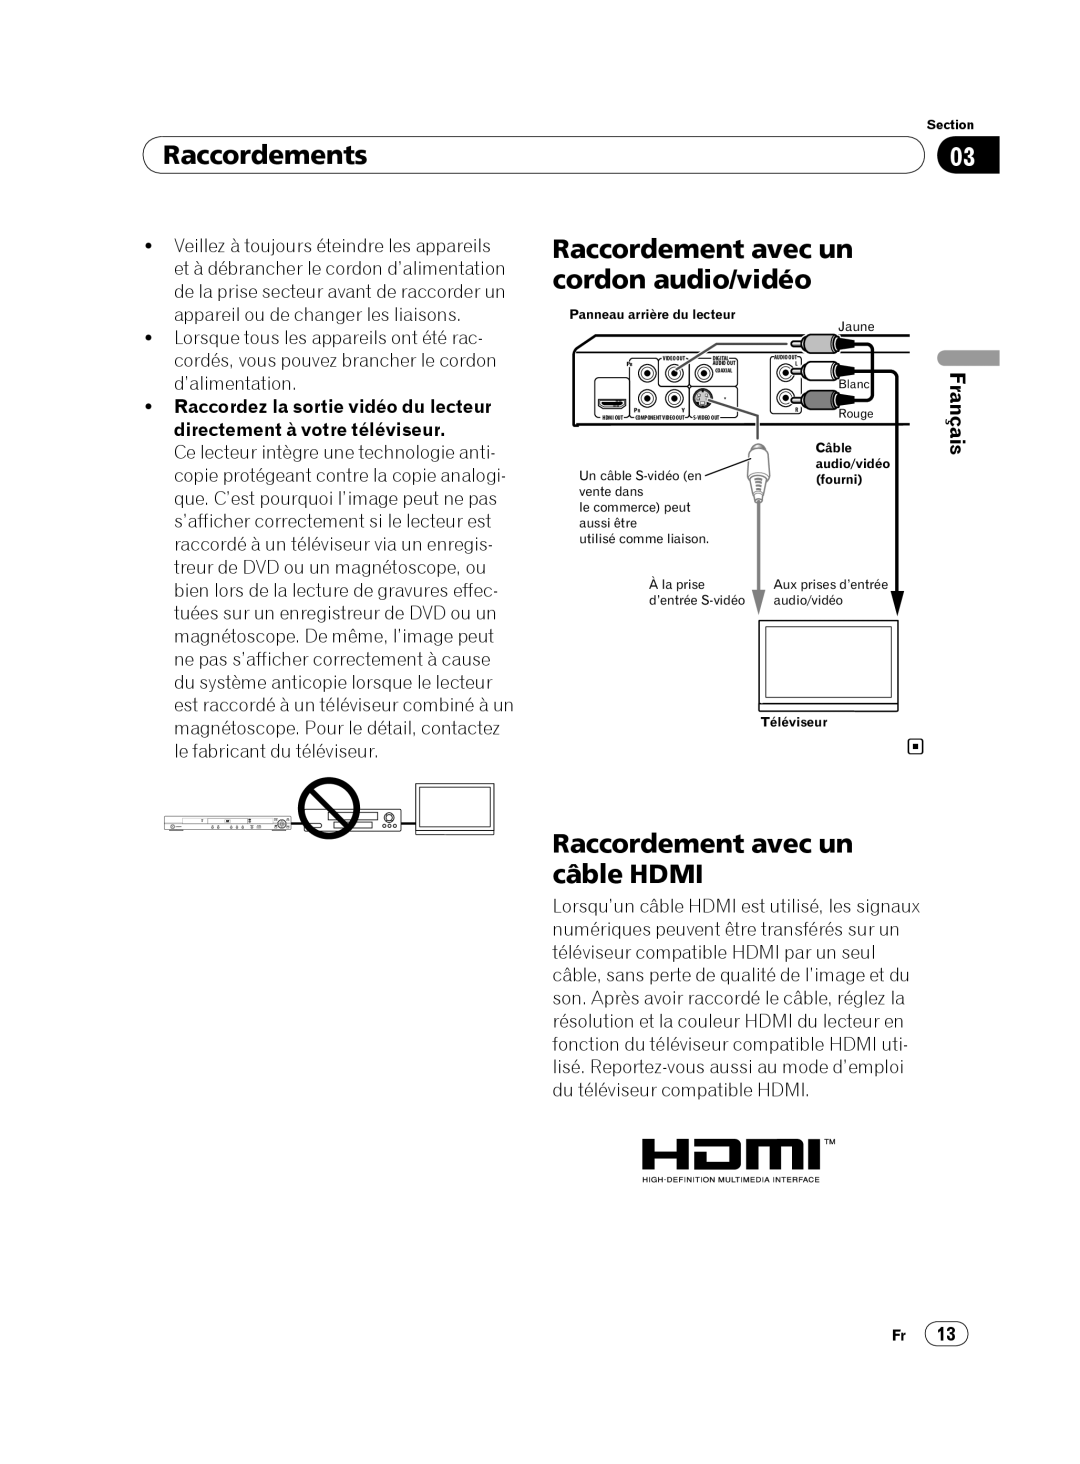 Pioneer DV-420V-K, DVP 420K operating instructions Raccordements, cordon audio/vidéo, Raccordement avec un câble HDMI 